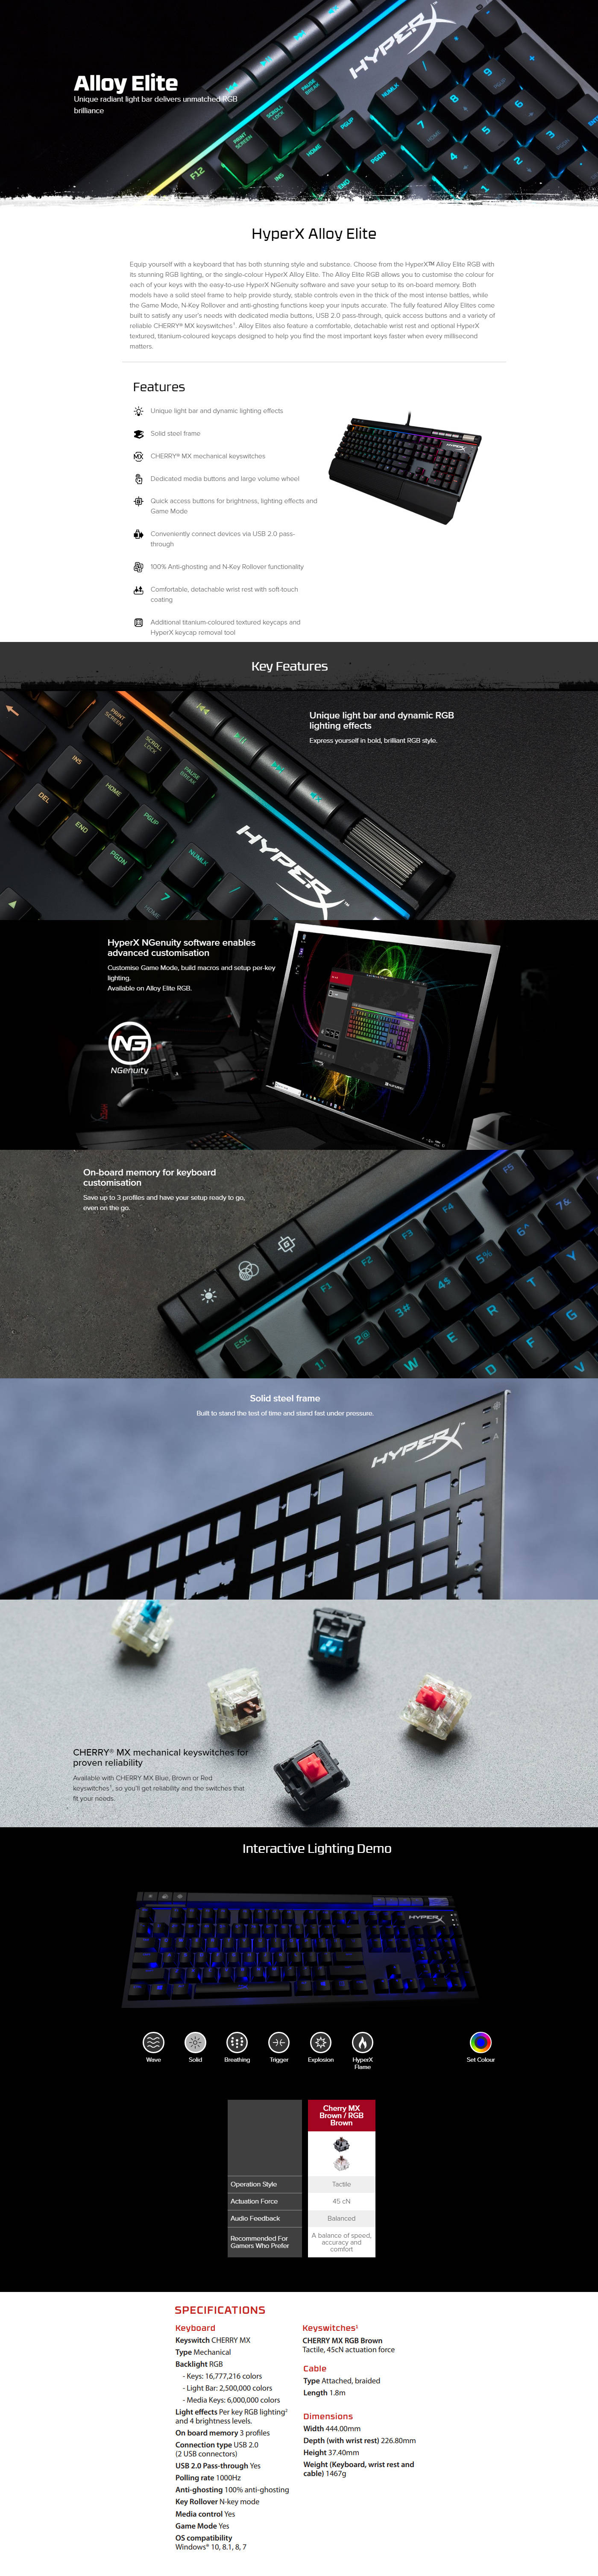  Buy Online HyperX Alloy Elite RGB Mechanical Gaming Keyboard - Cherry MX RGB Brown